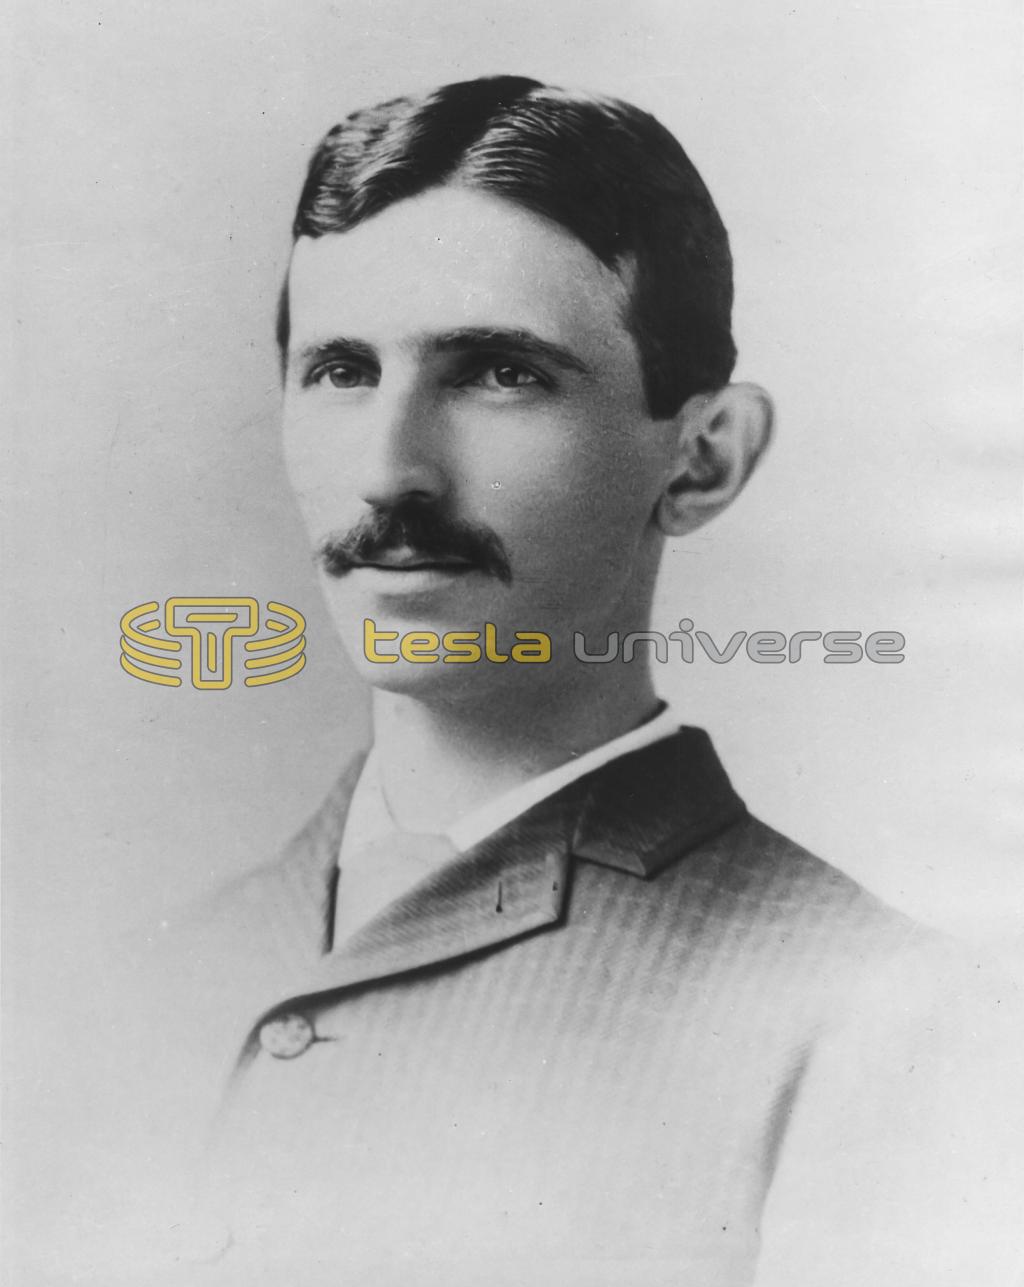 Portrait of Nikola Tesla at age 29, taken in 1884